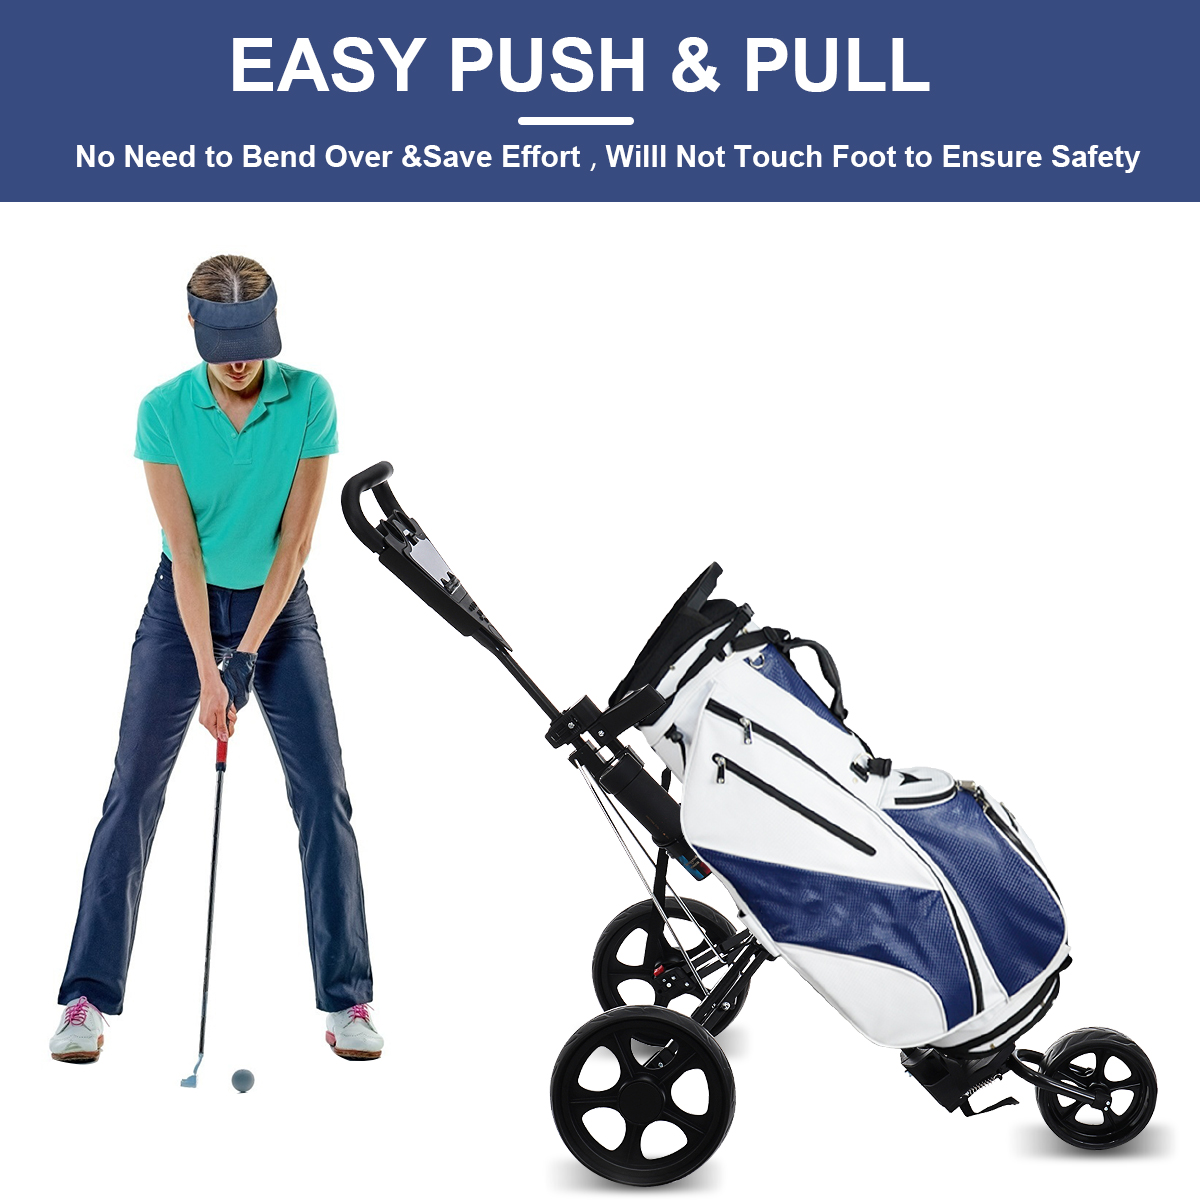 3-Wheel-Folding-Golf-Cart-Pull-Push-Trolley-with-Scorecard-Cup-Holder-Foot-Brake-Outdoor-Sport-1839339-7